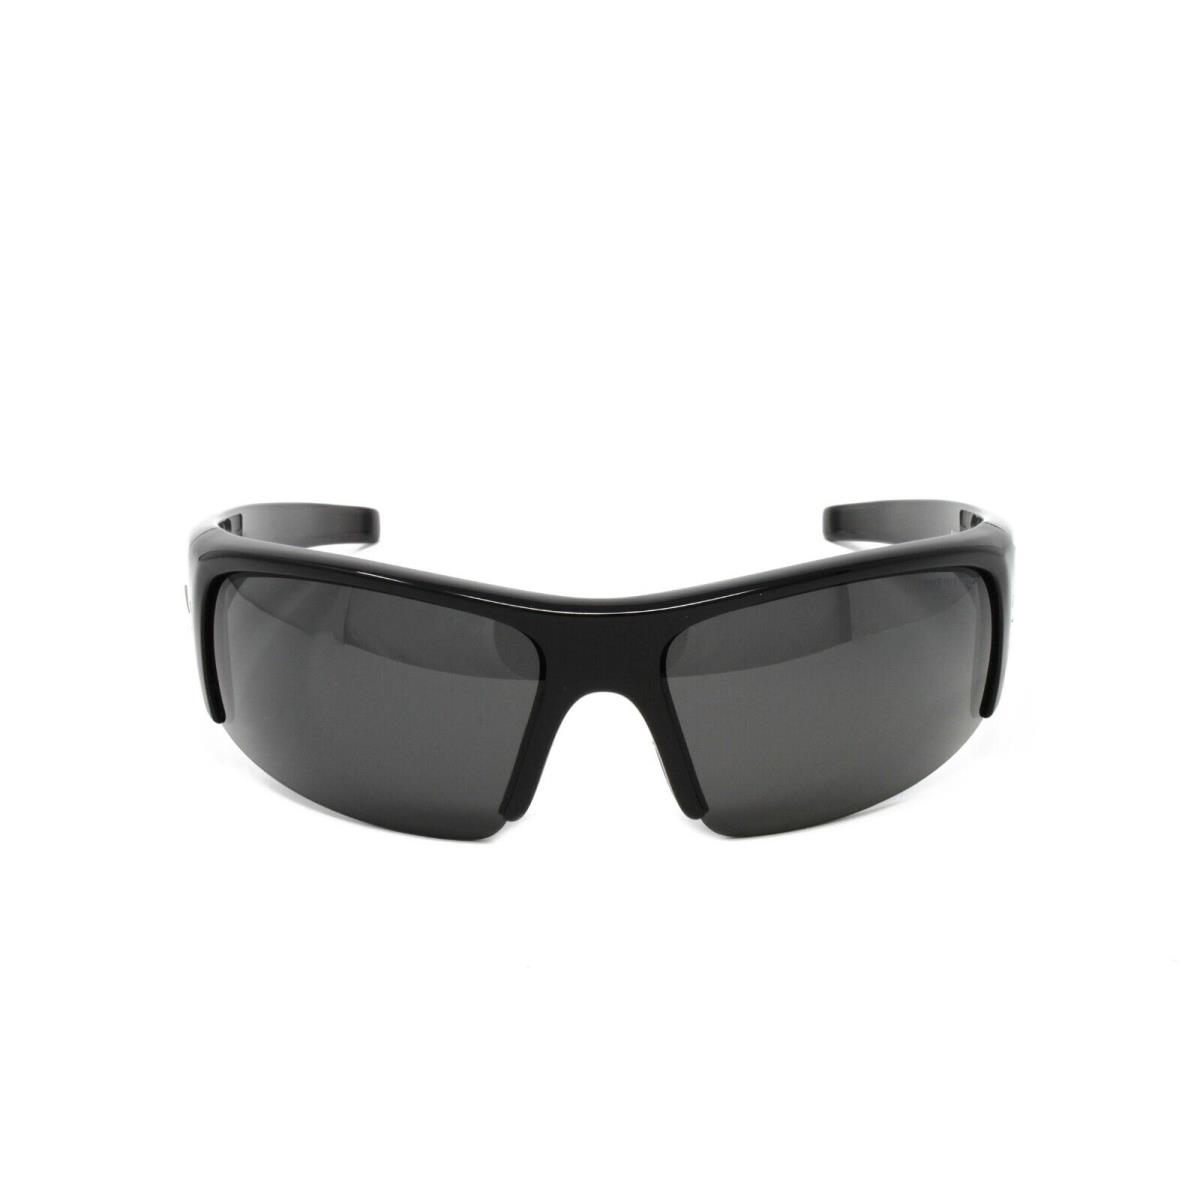 Nike Sunglasses Diverge EV0325 002 Black 64mm Grey Lens - Frame: Black, Lens: Gray